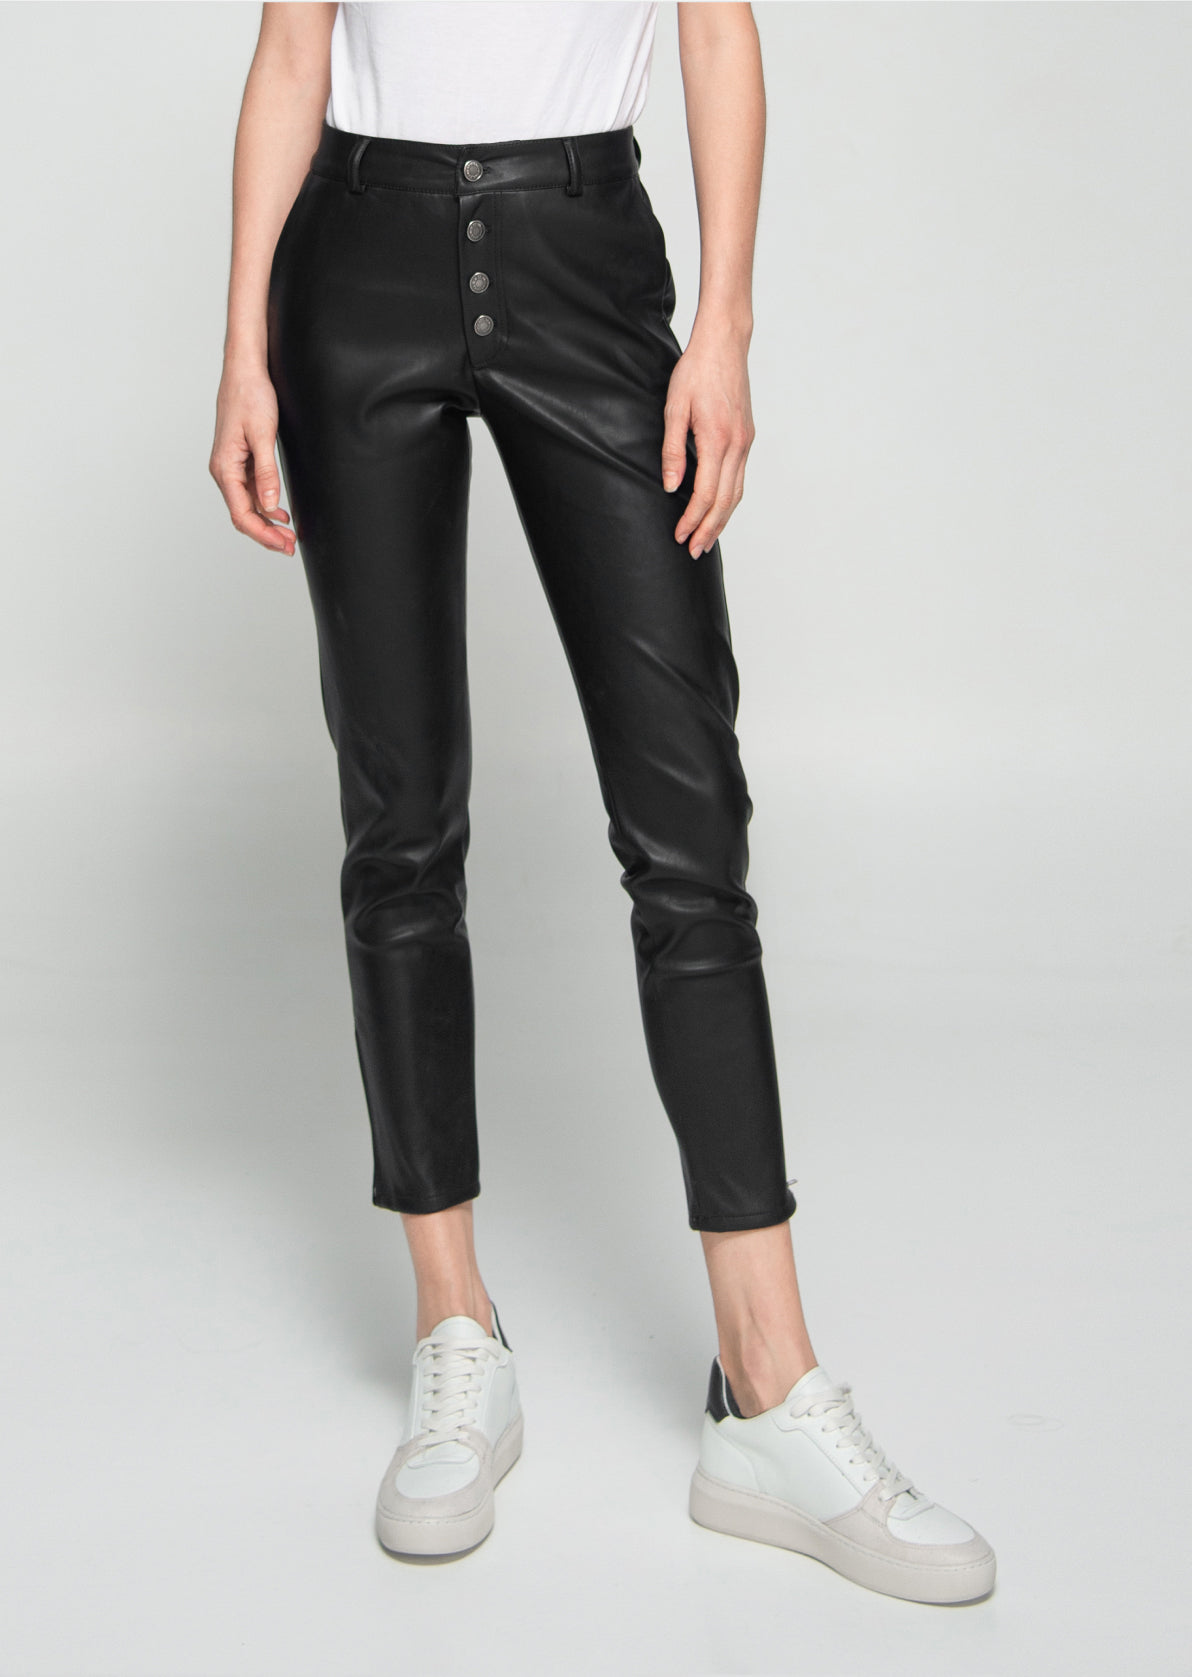 Nina Cropped Pant - Vegan Leather Pants